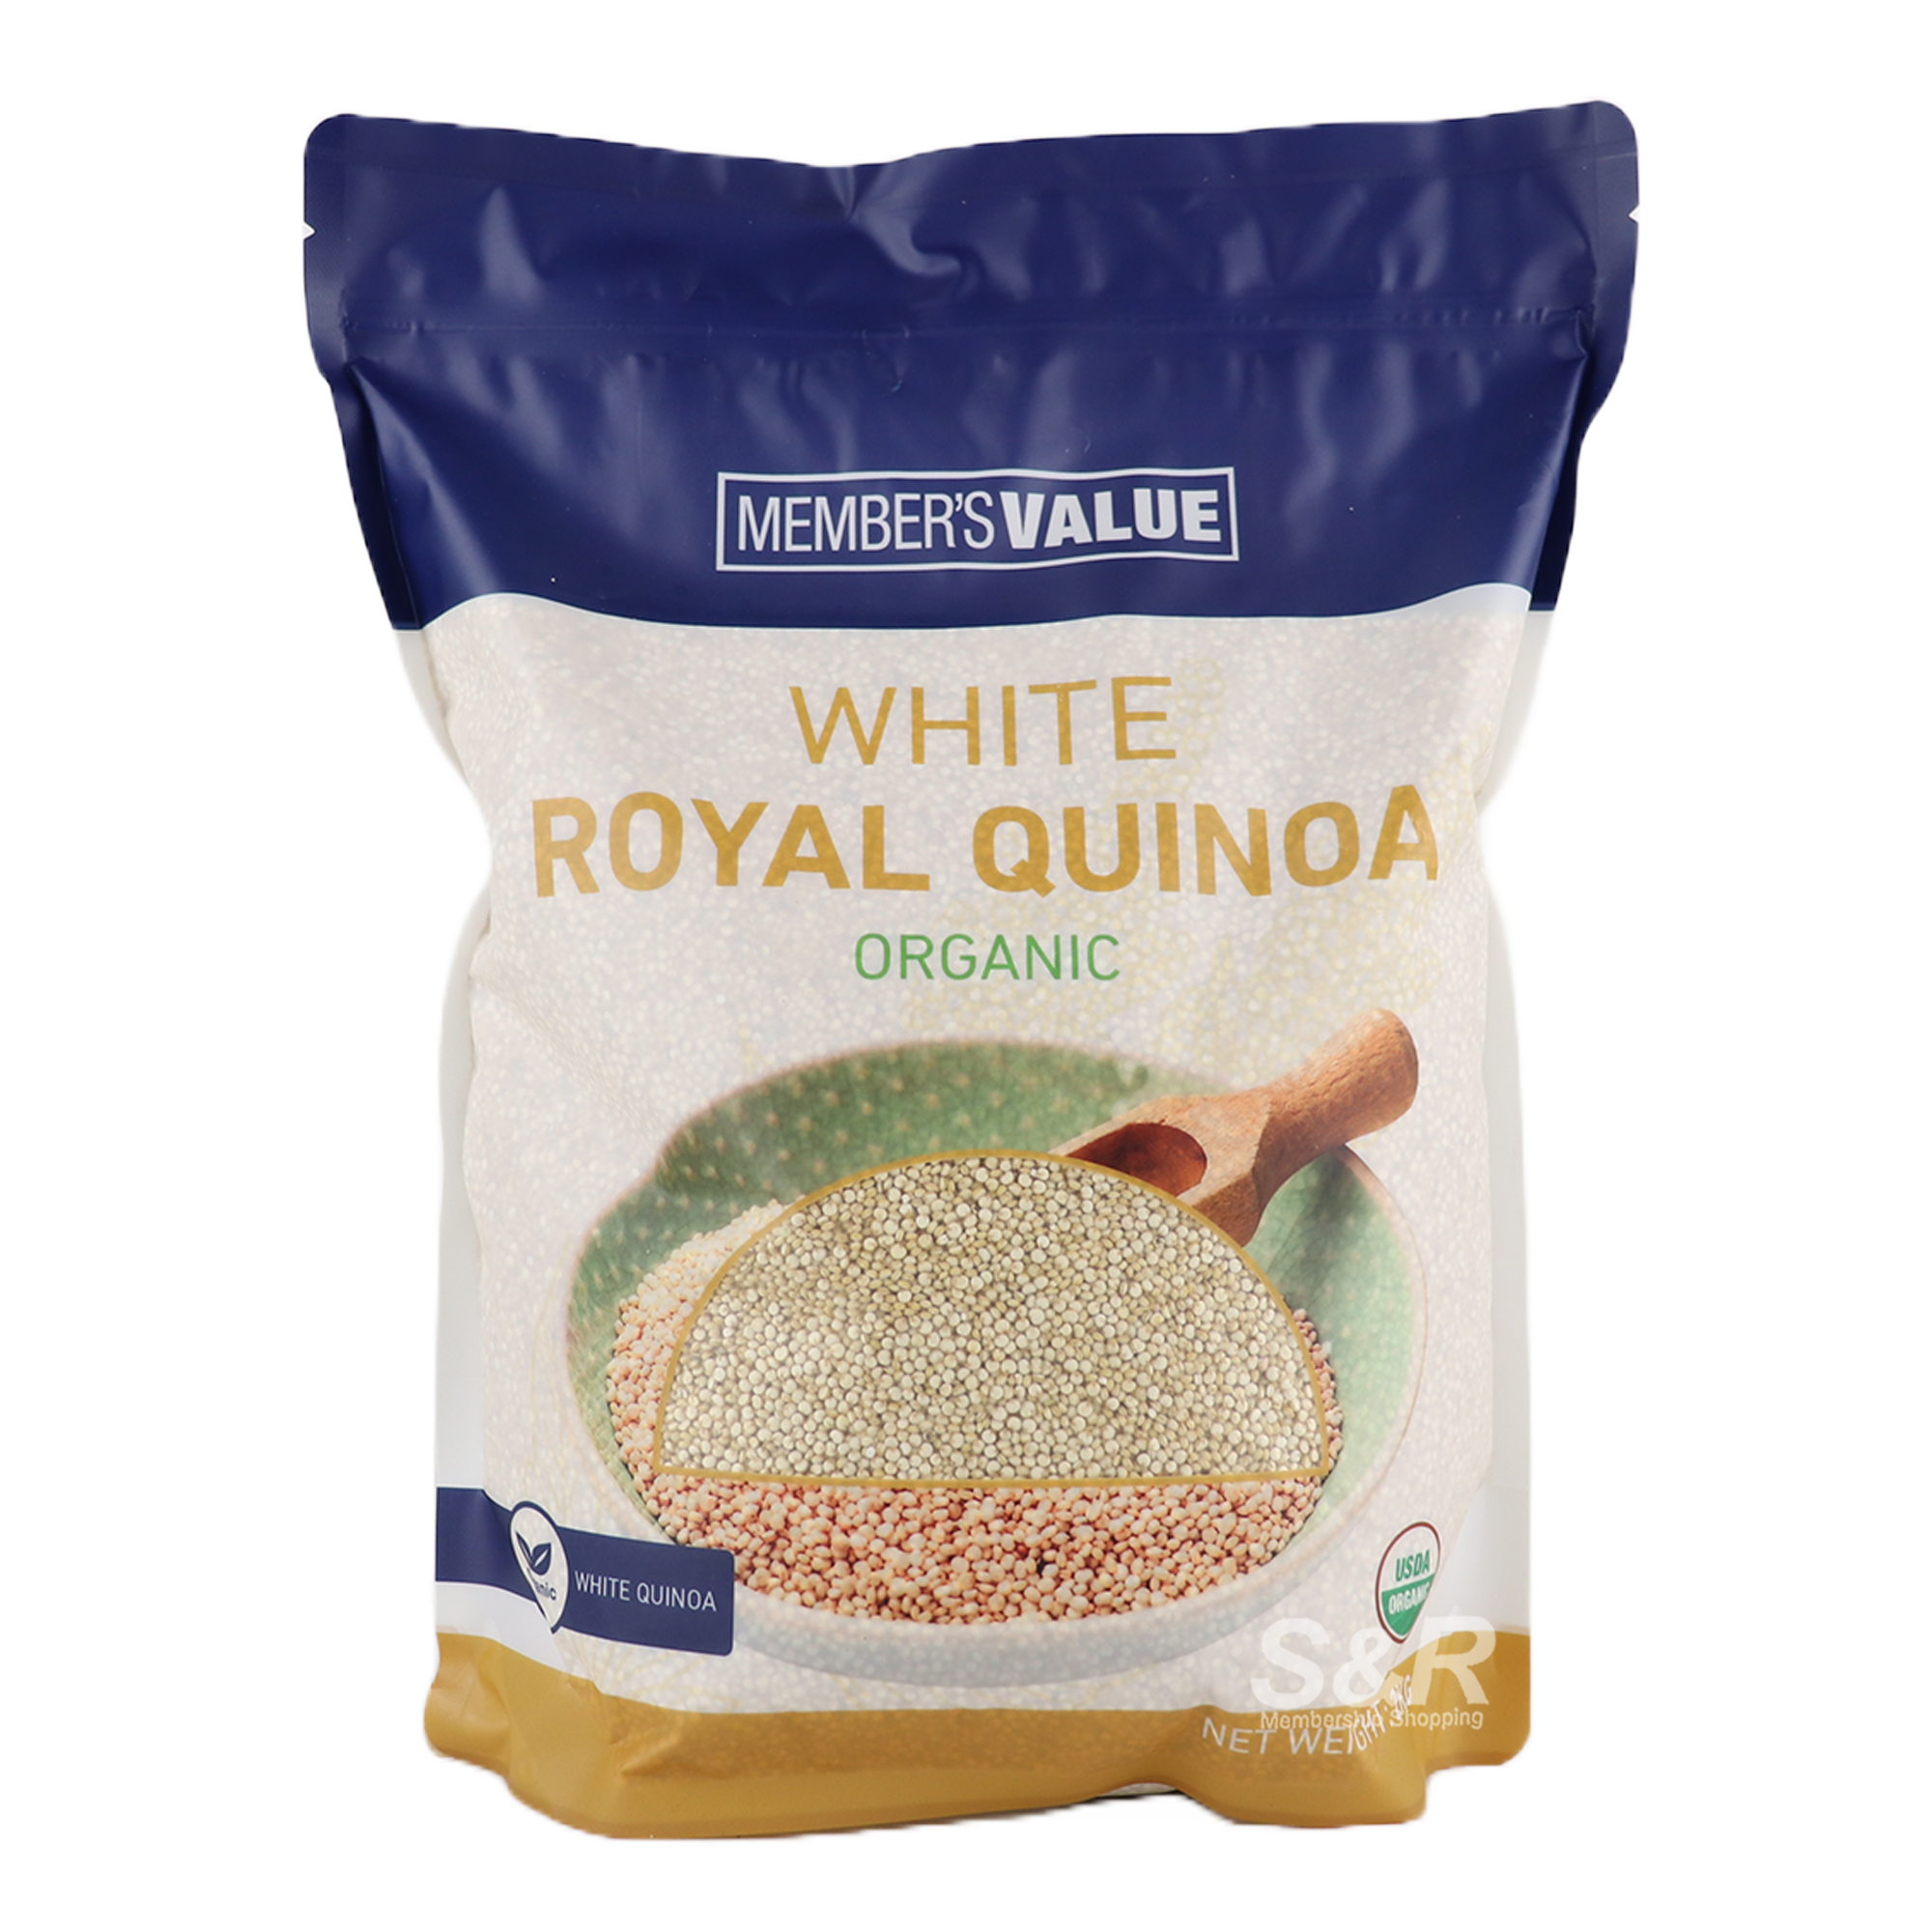 Member's Value Organic White Royal Quinoa 2kg